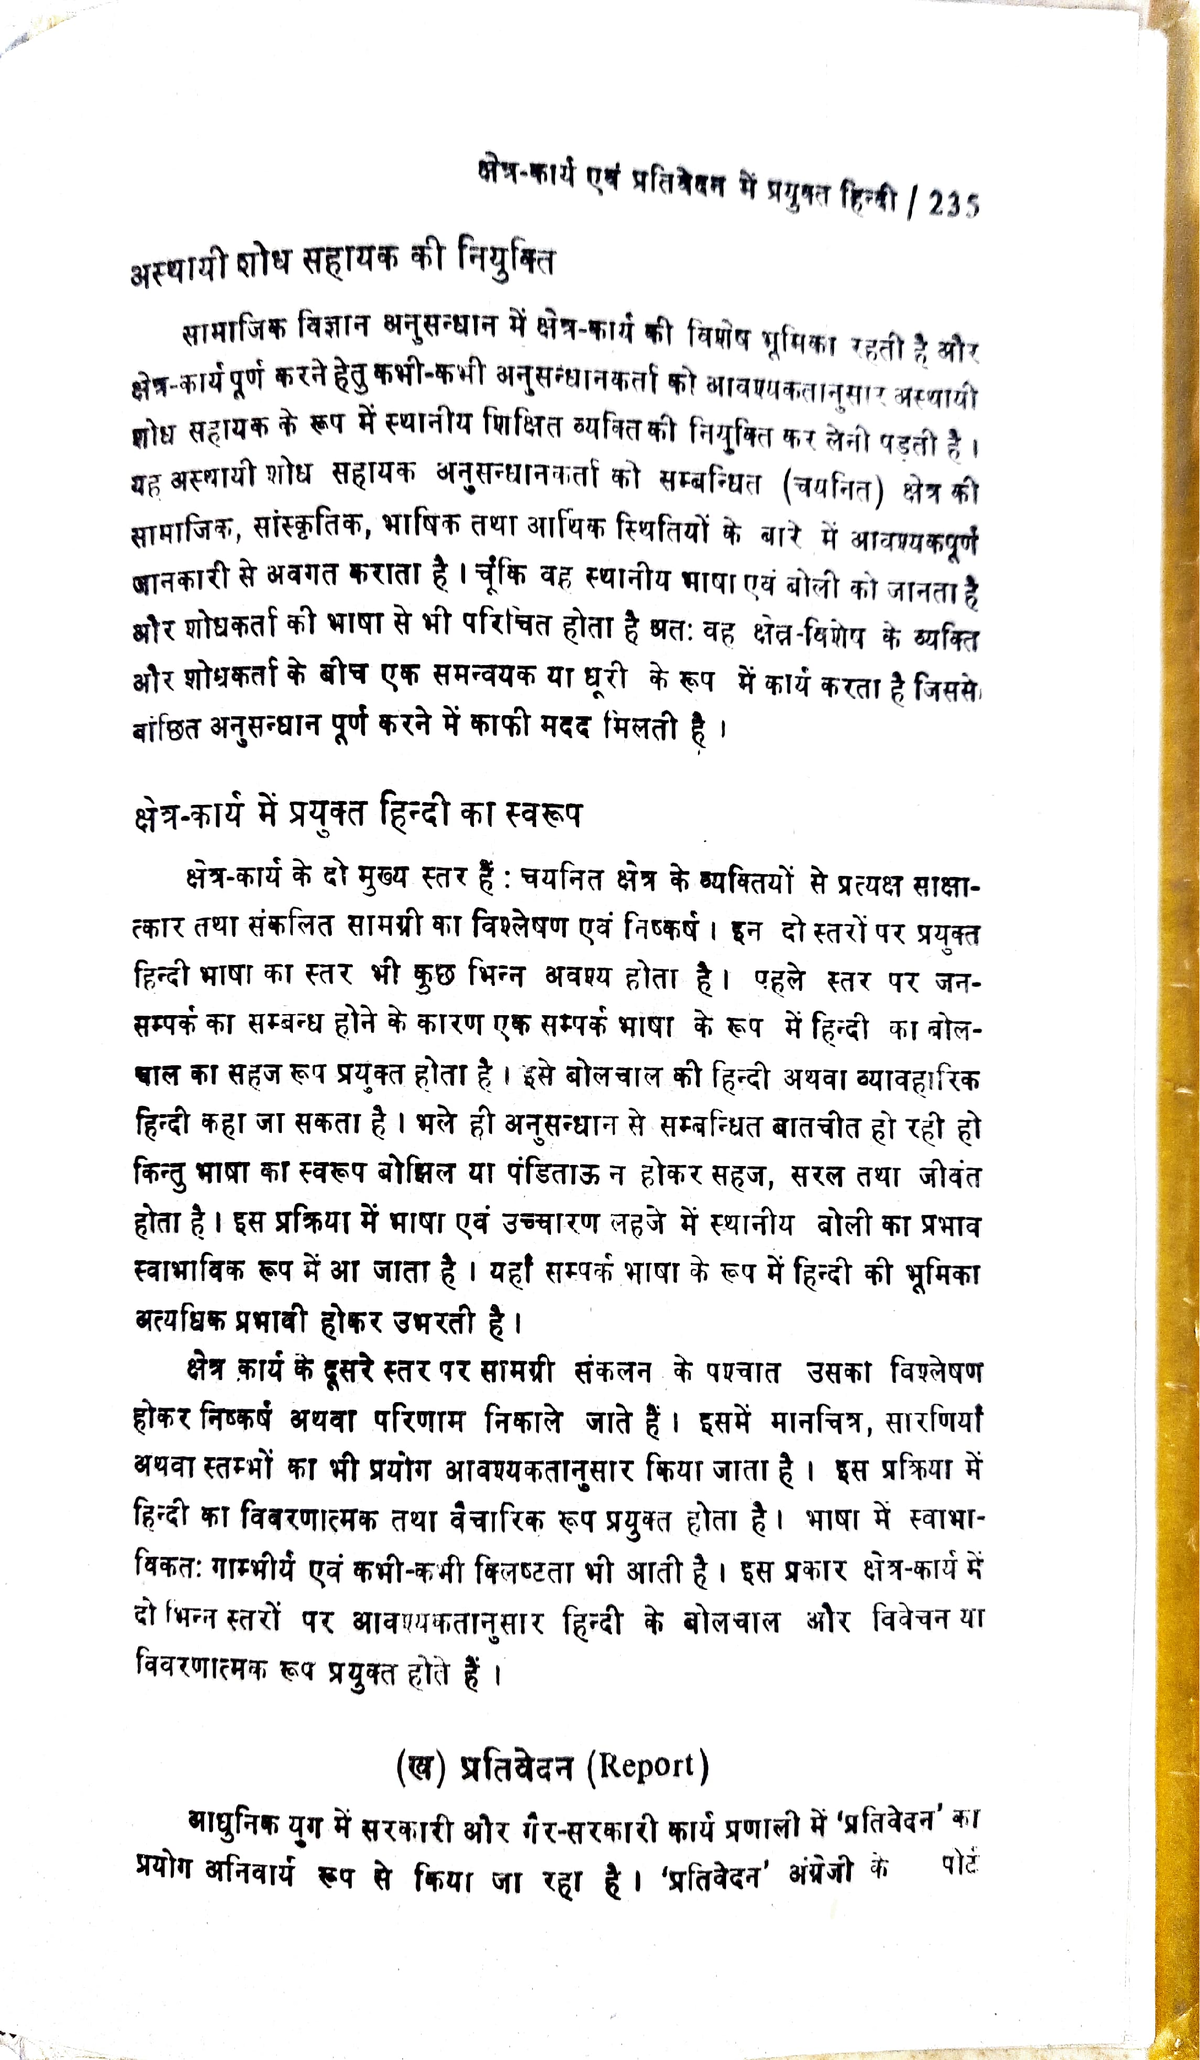 Prativedan - AECC Hindi (ख) - B.a Programme - Delhi University - Studocu